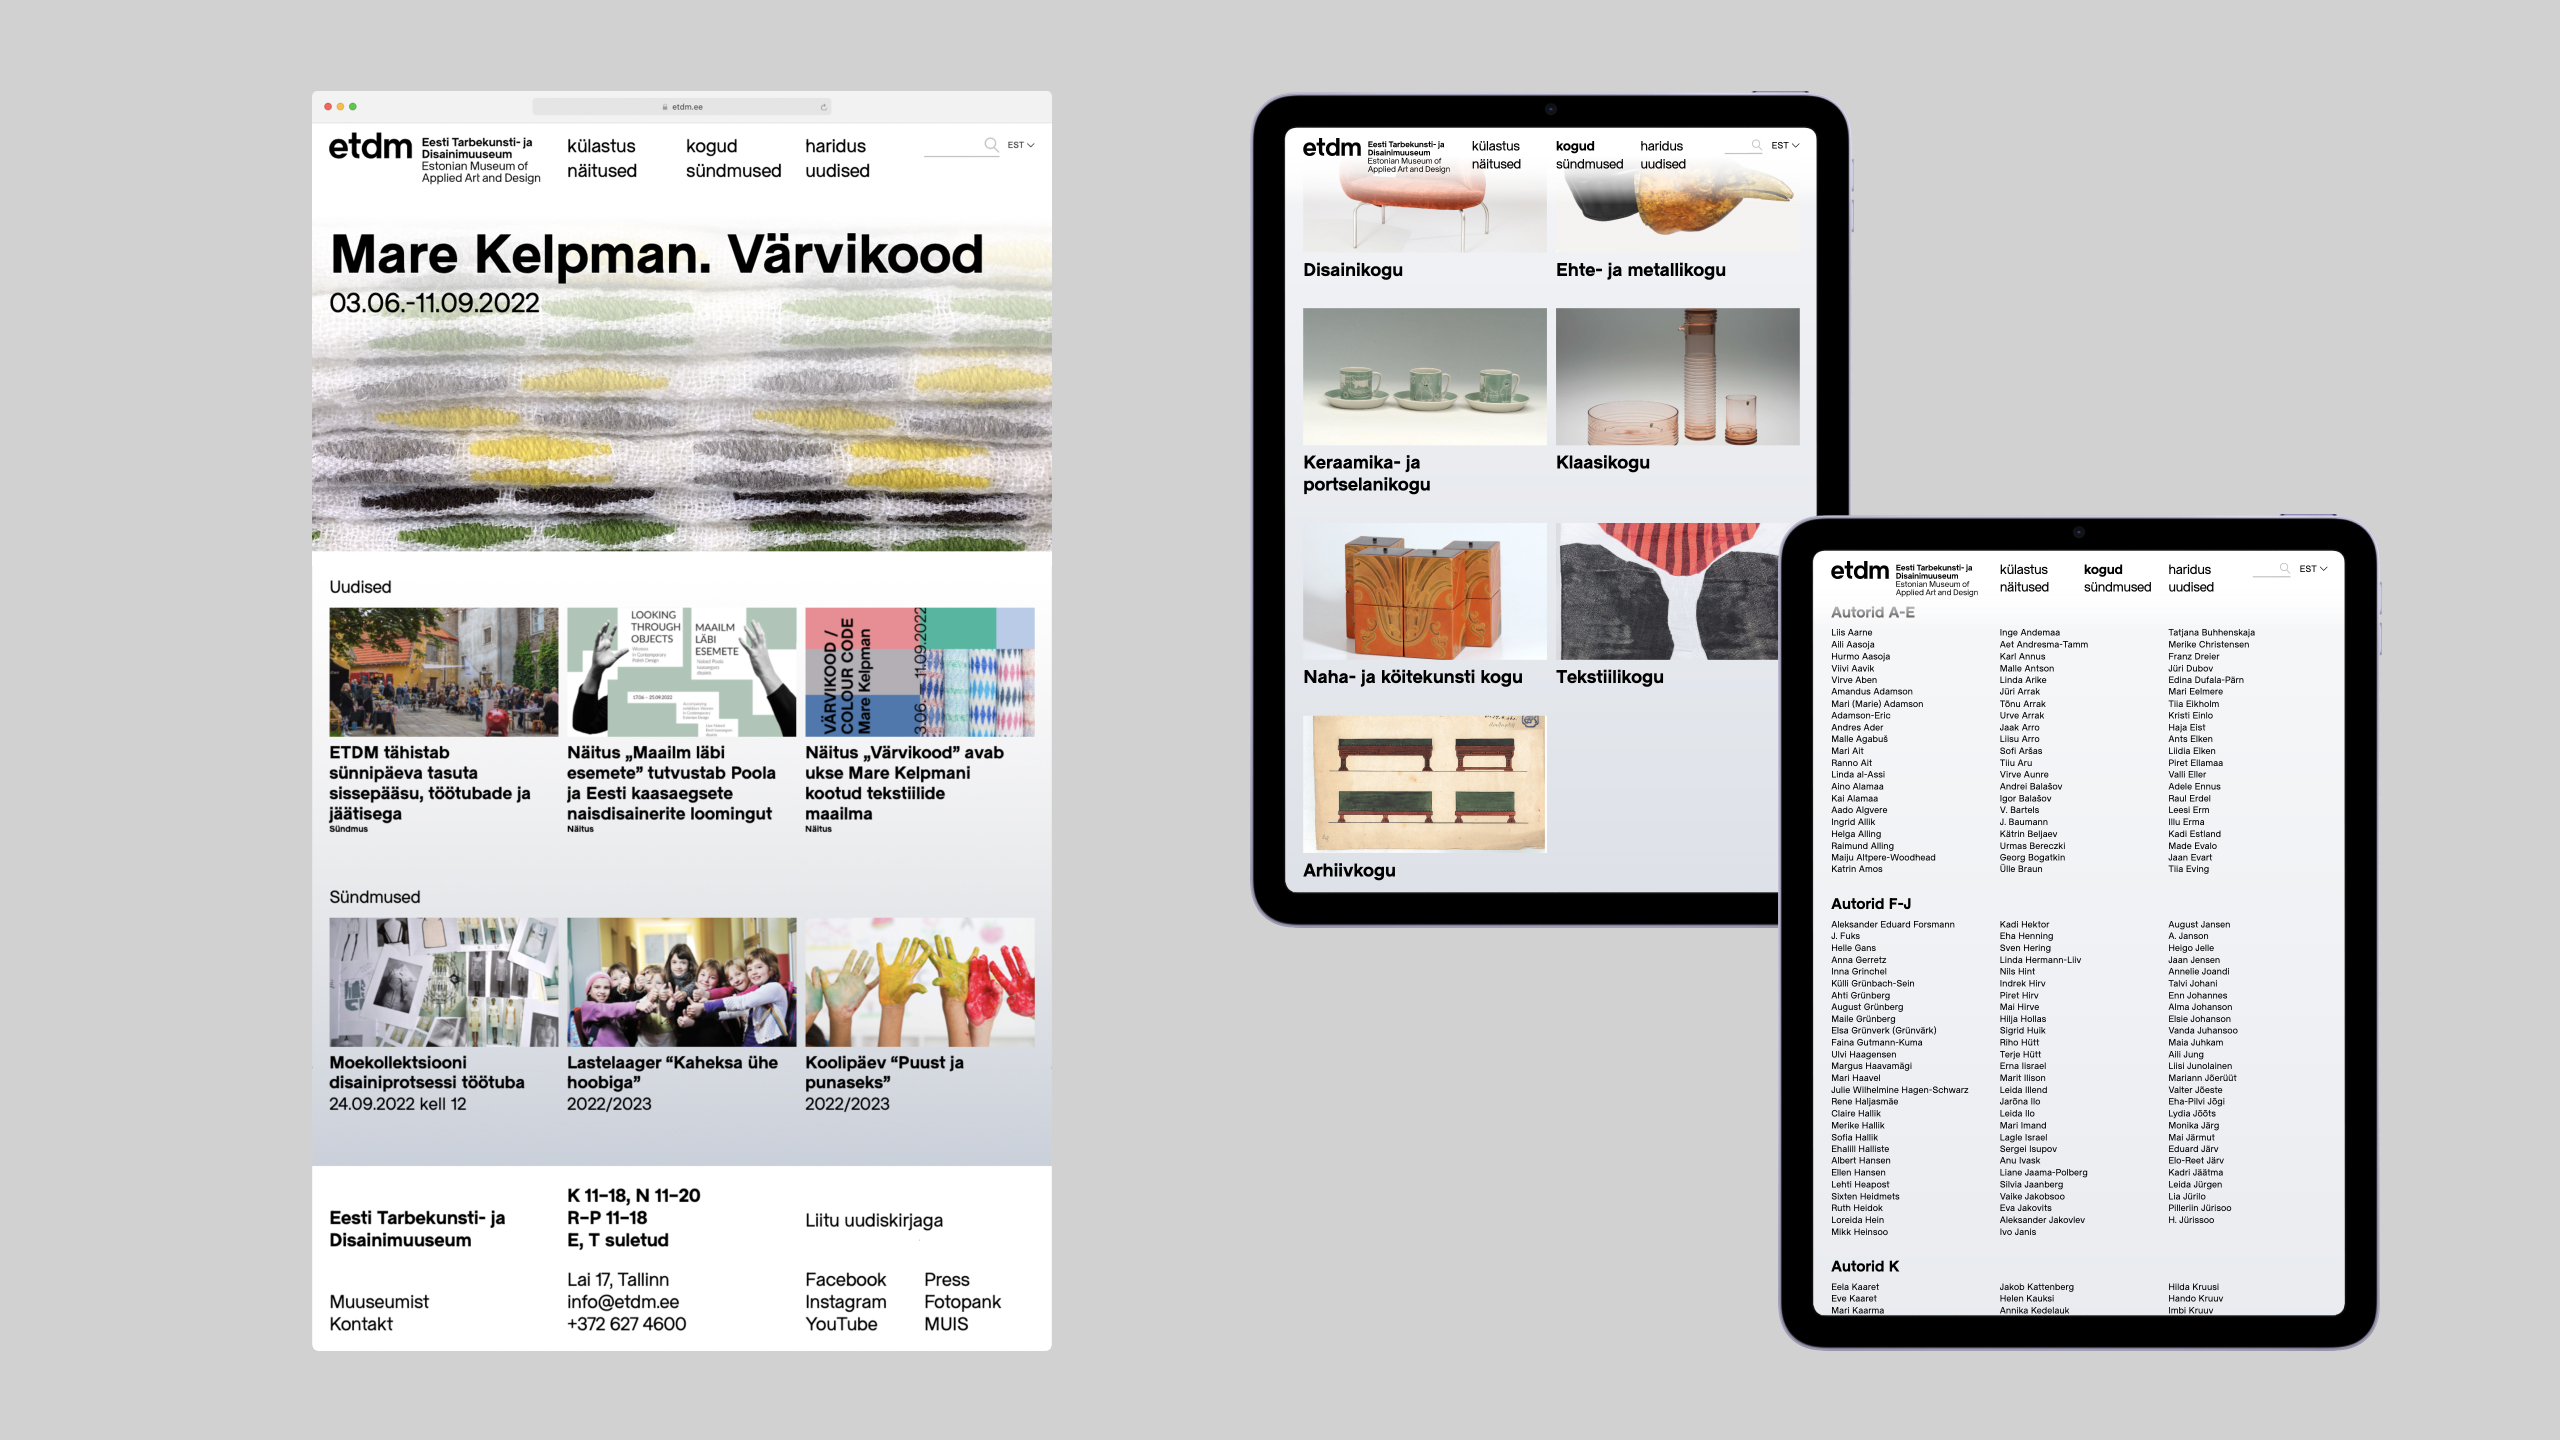 Screenshot of website for Estonian Museum of Applied Art and Design